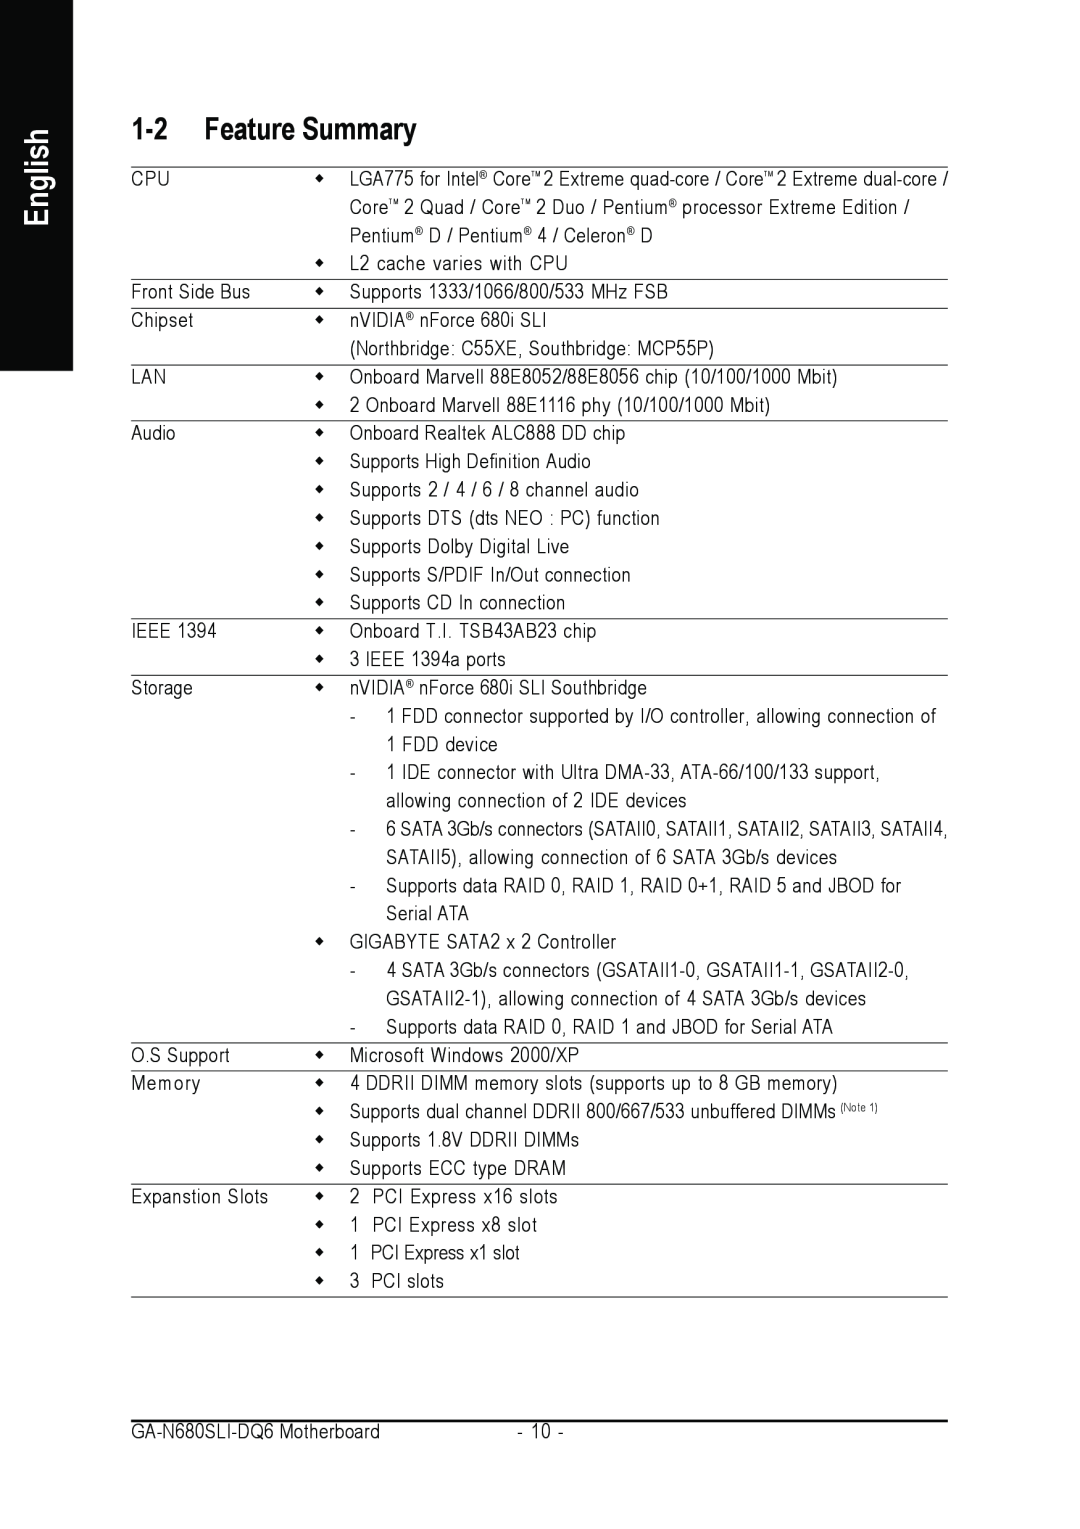 Intel GA-N680SLI-DQ6 user manual Feature Summary, English, CoreTM 2 Quad / CoreTM 2 Duo / Pentium processor Extreme Edition 